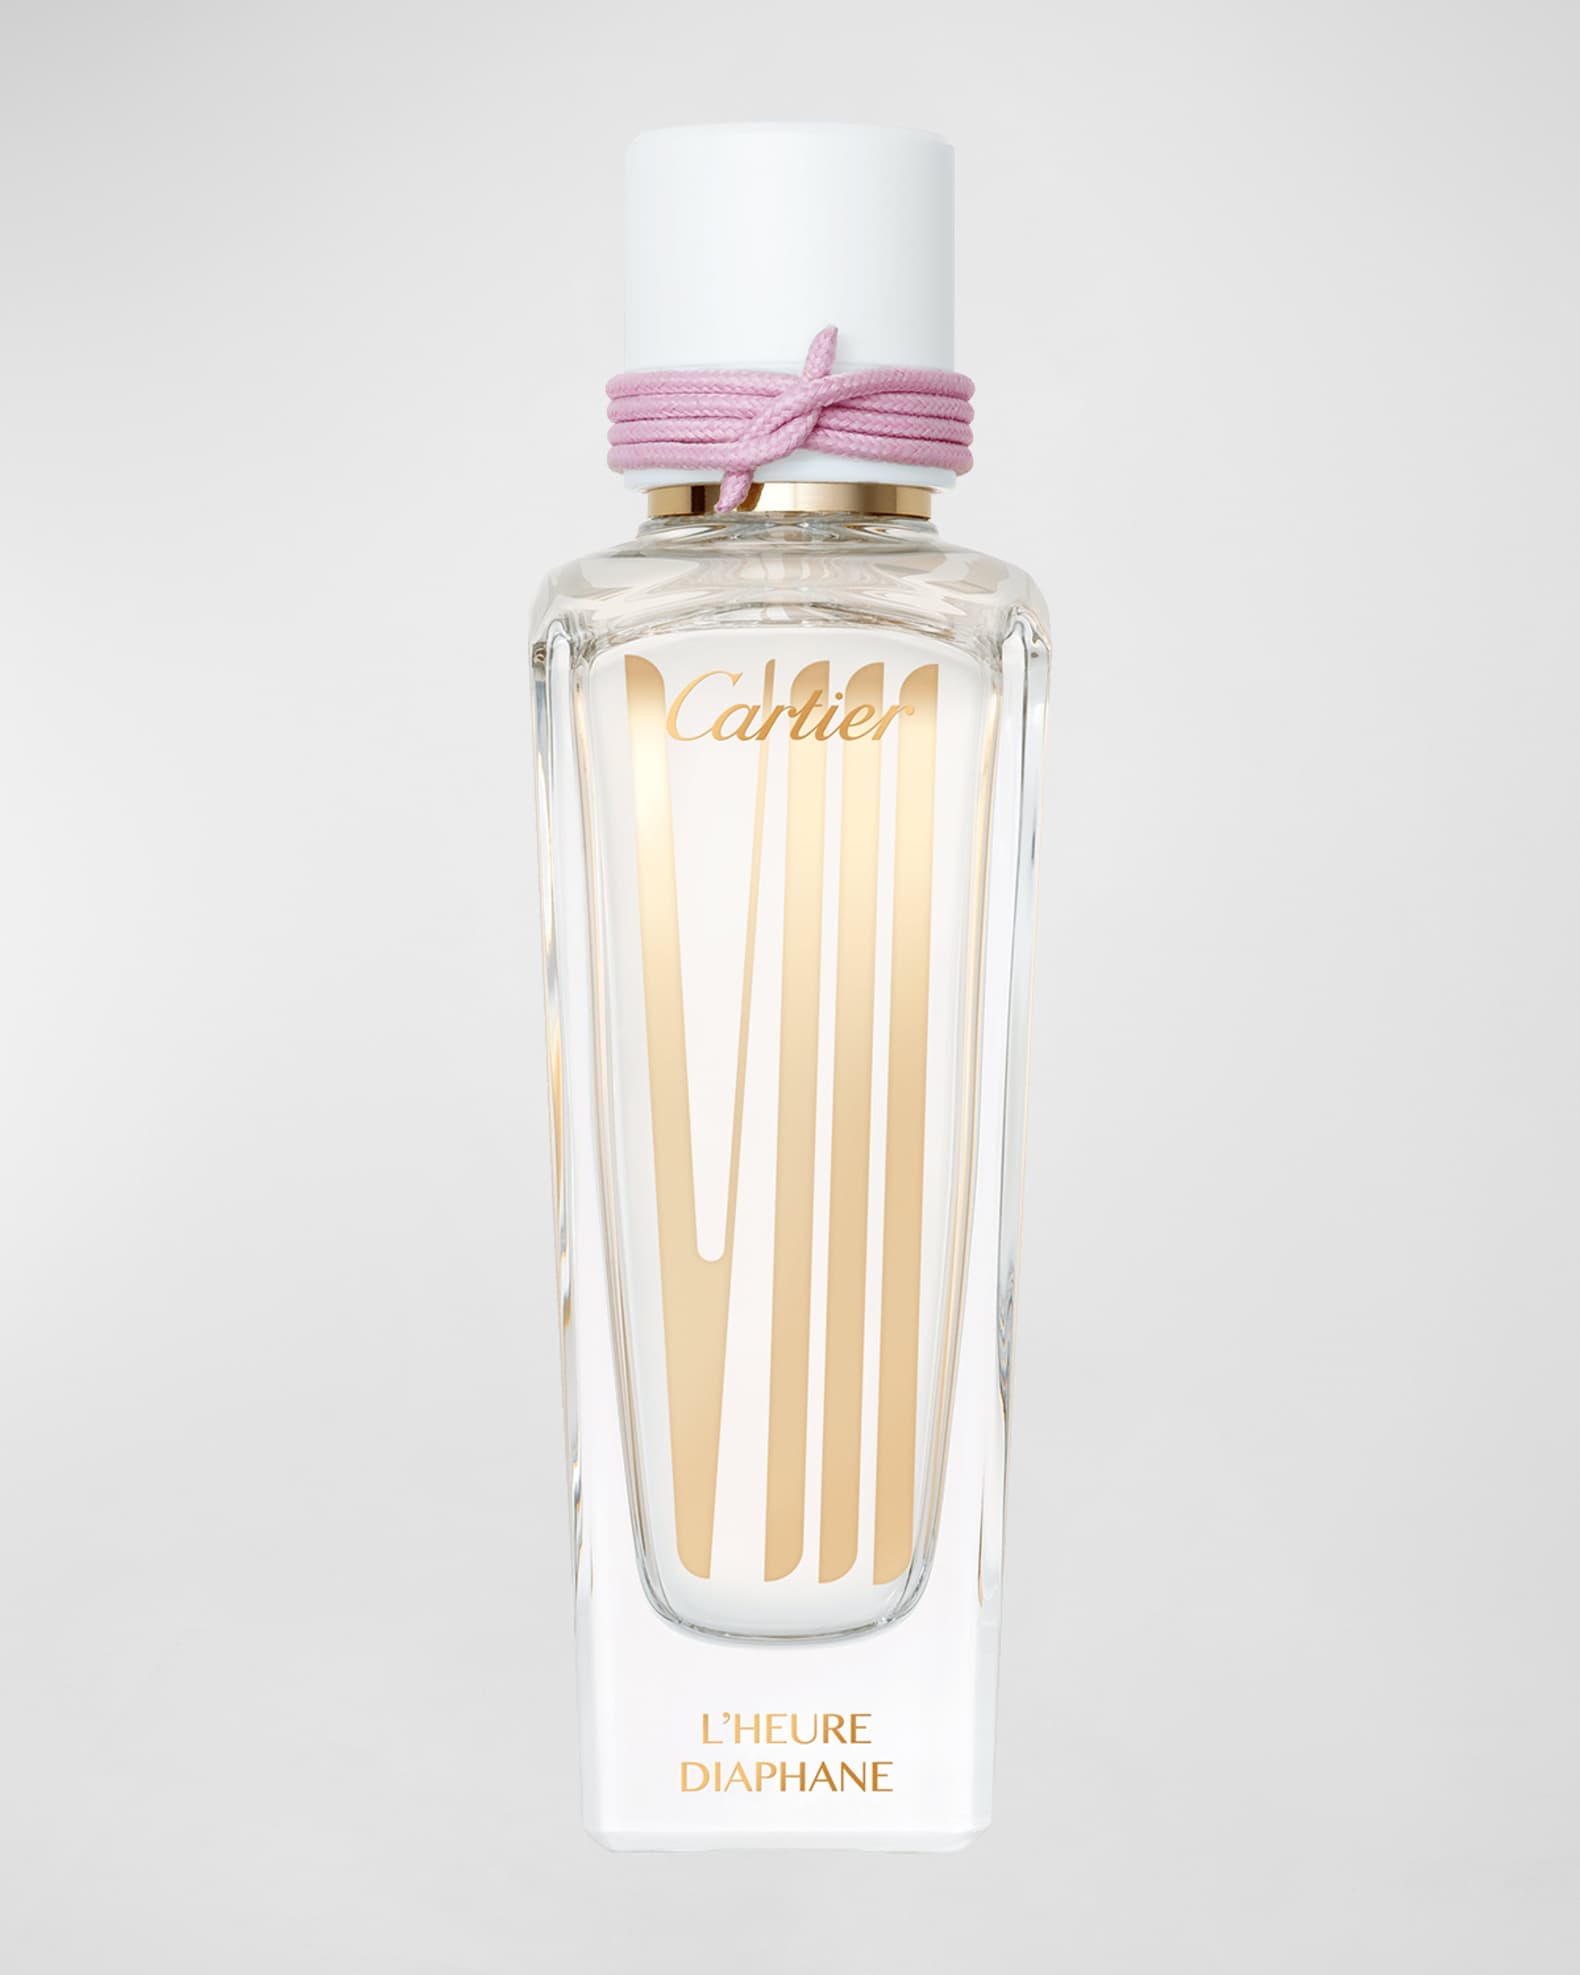 Guerlain L'Heure Bleue Eau De Parfum Spray 75ml/2.5oz - Eau De Parfum, Free Worldwide Shipping